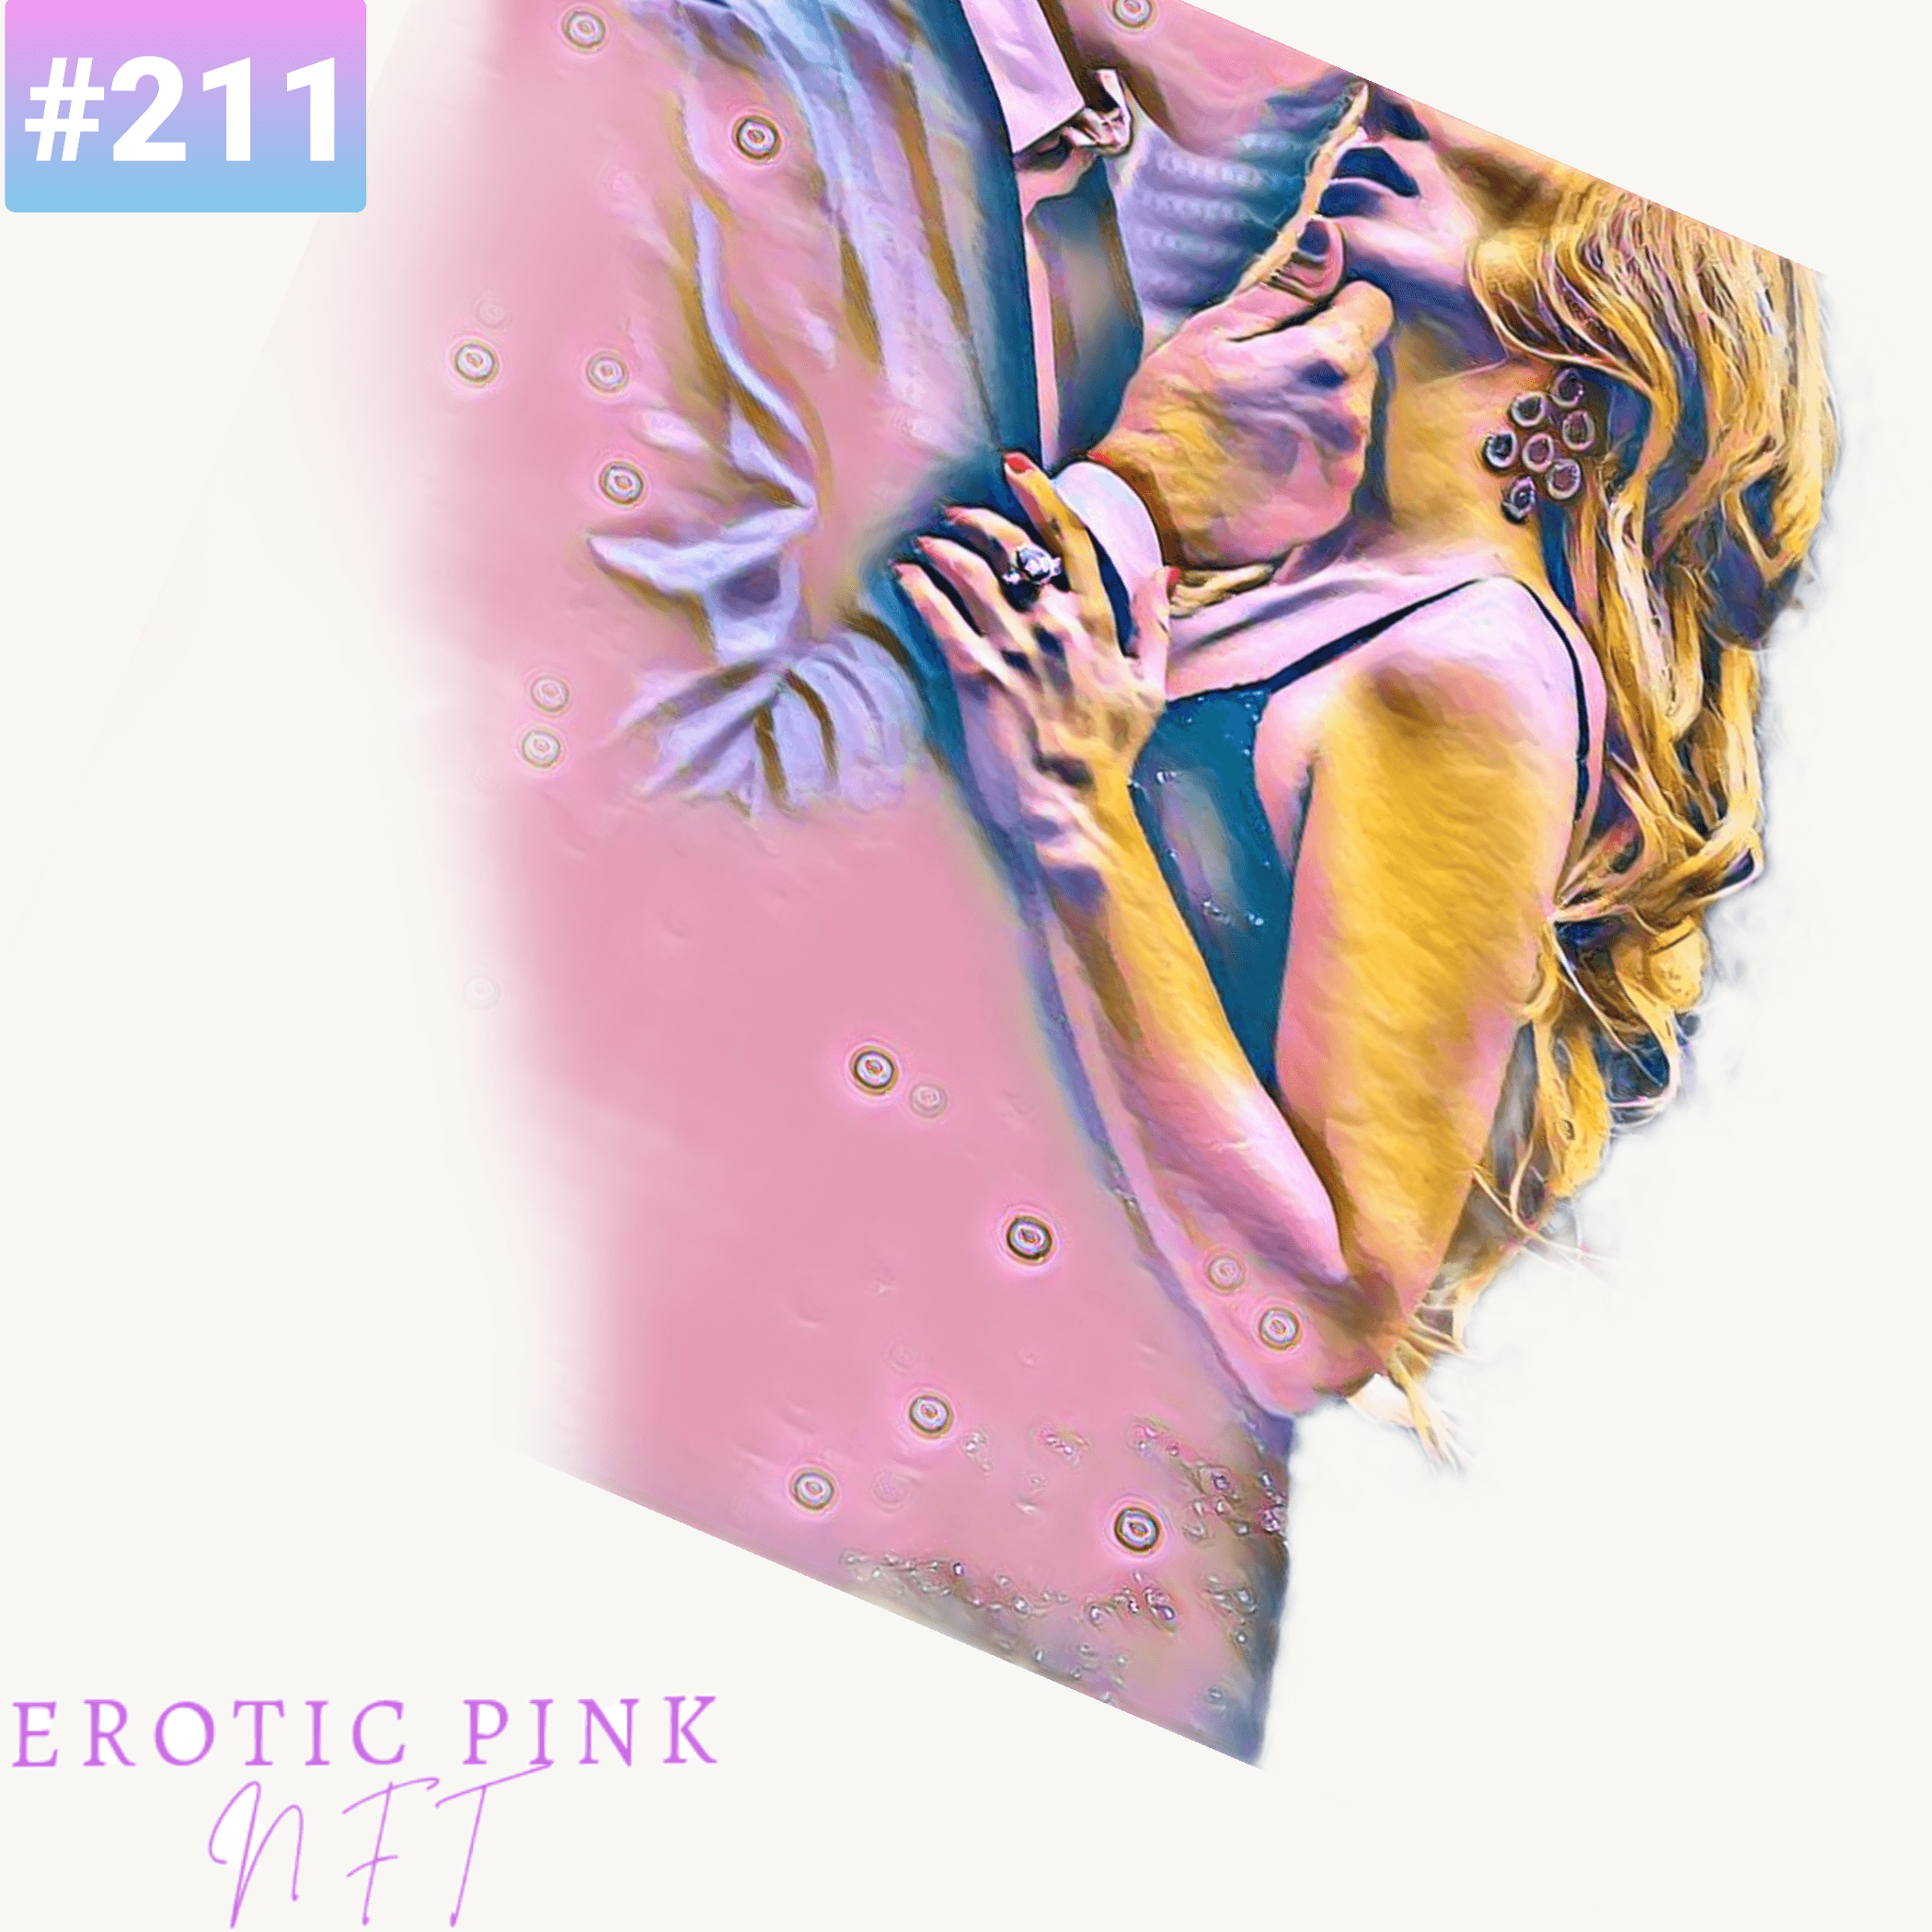 Erotic Pink #211